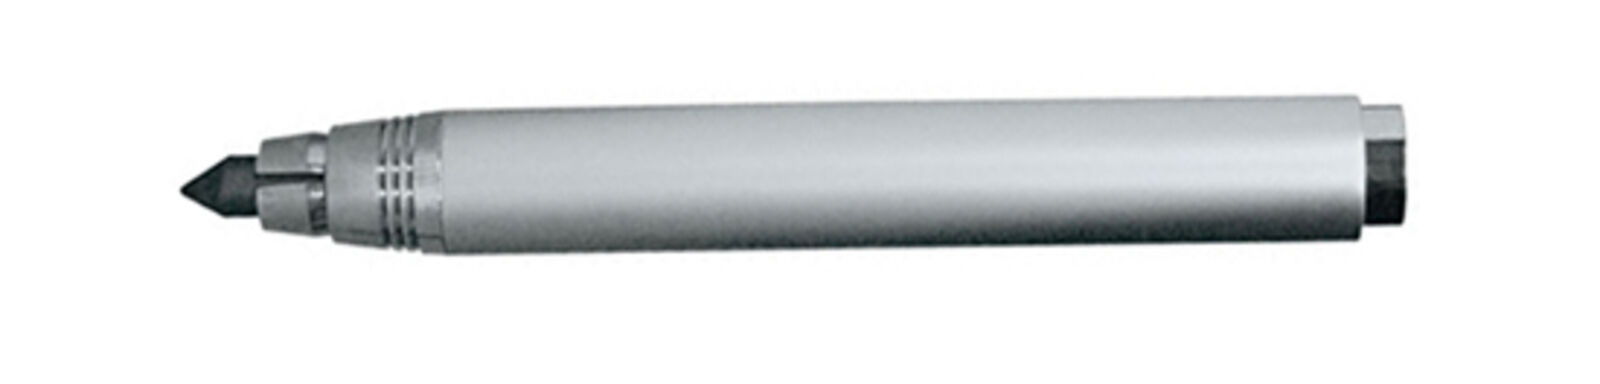 Kaweco Sketch Up ALWrite Clutch Aluminum 5.6mm Pencil - NEW in Box